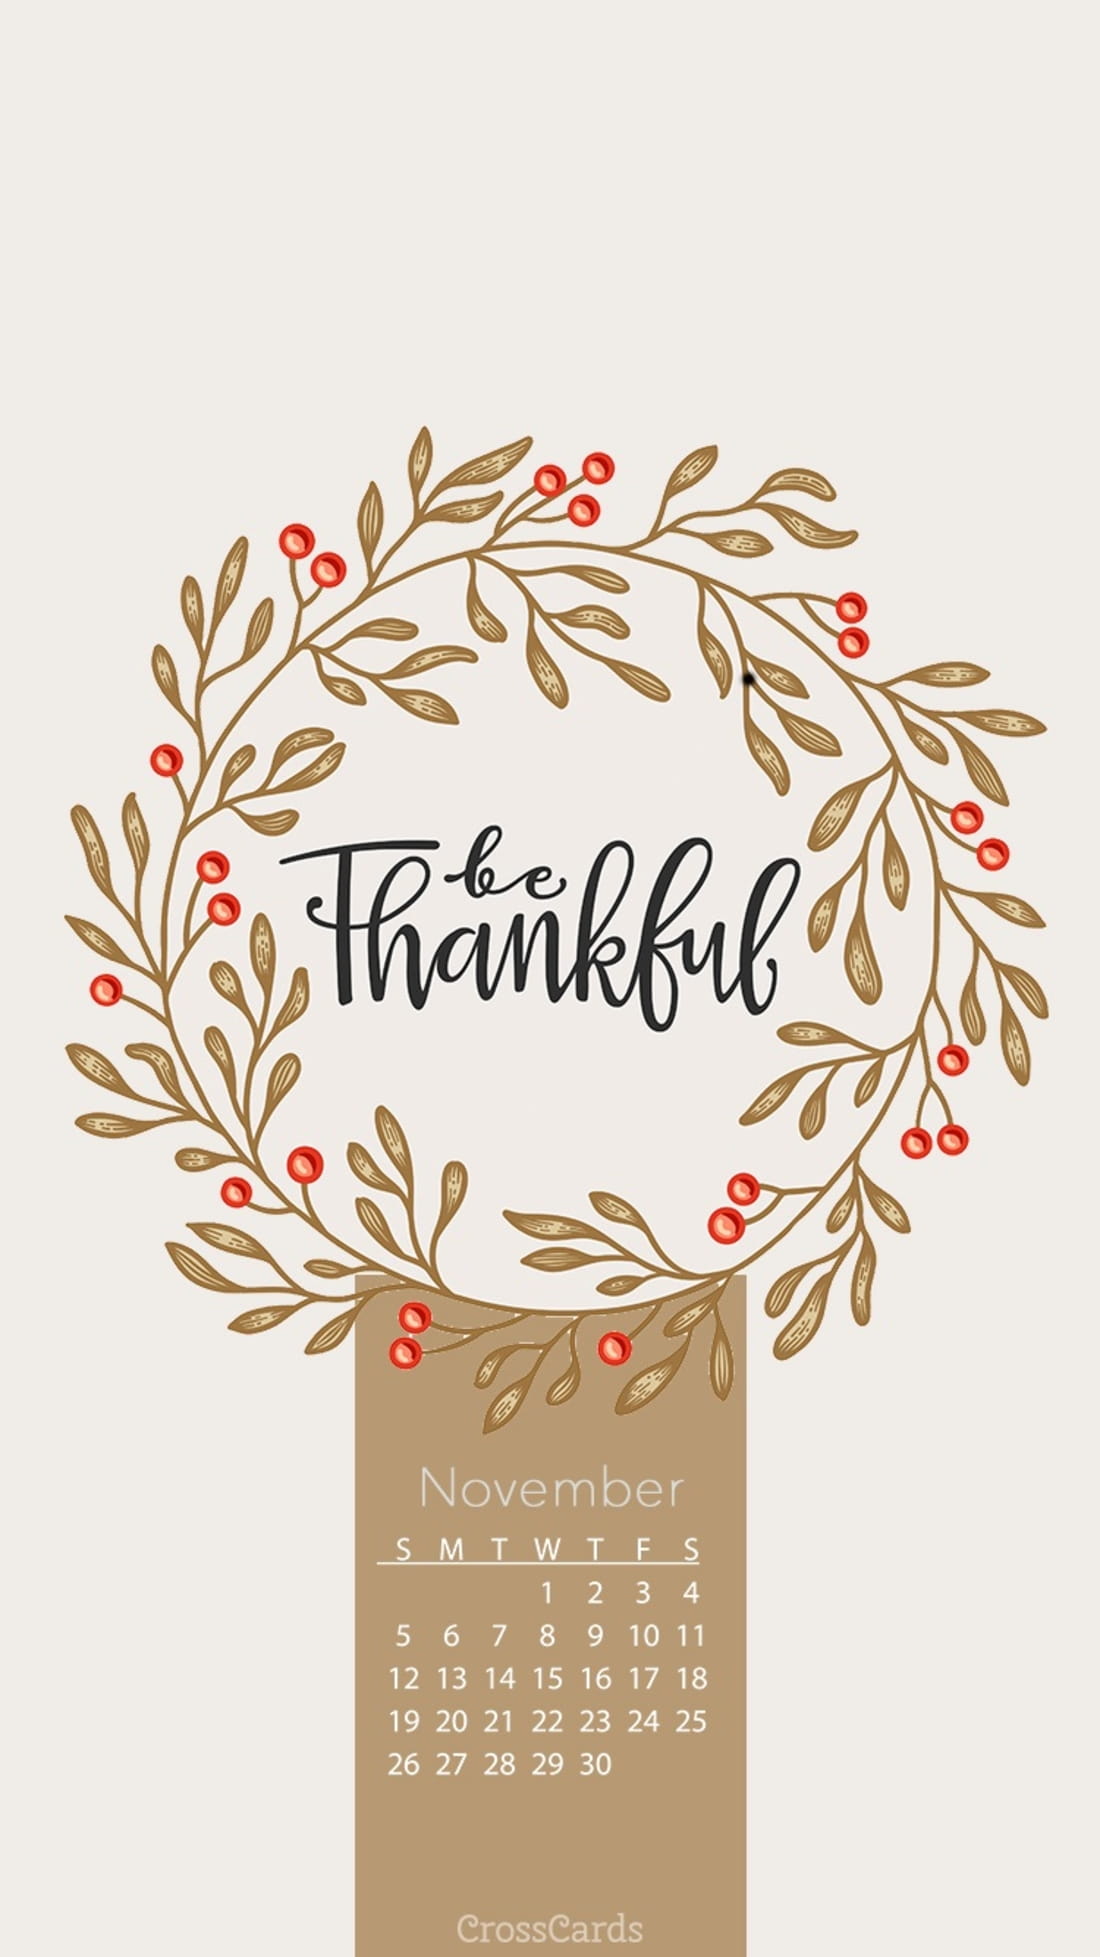 November 2017 - Be Thankful mobile phone wallpaper